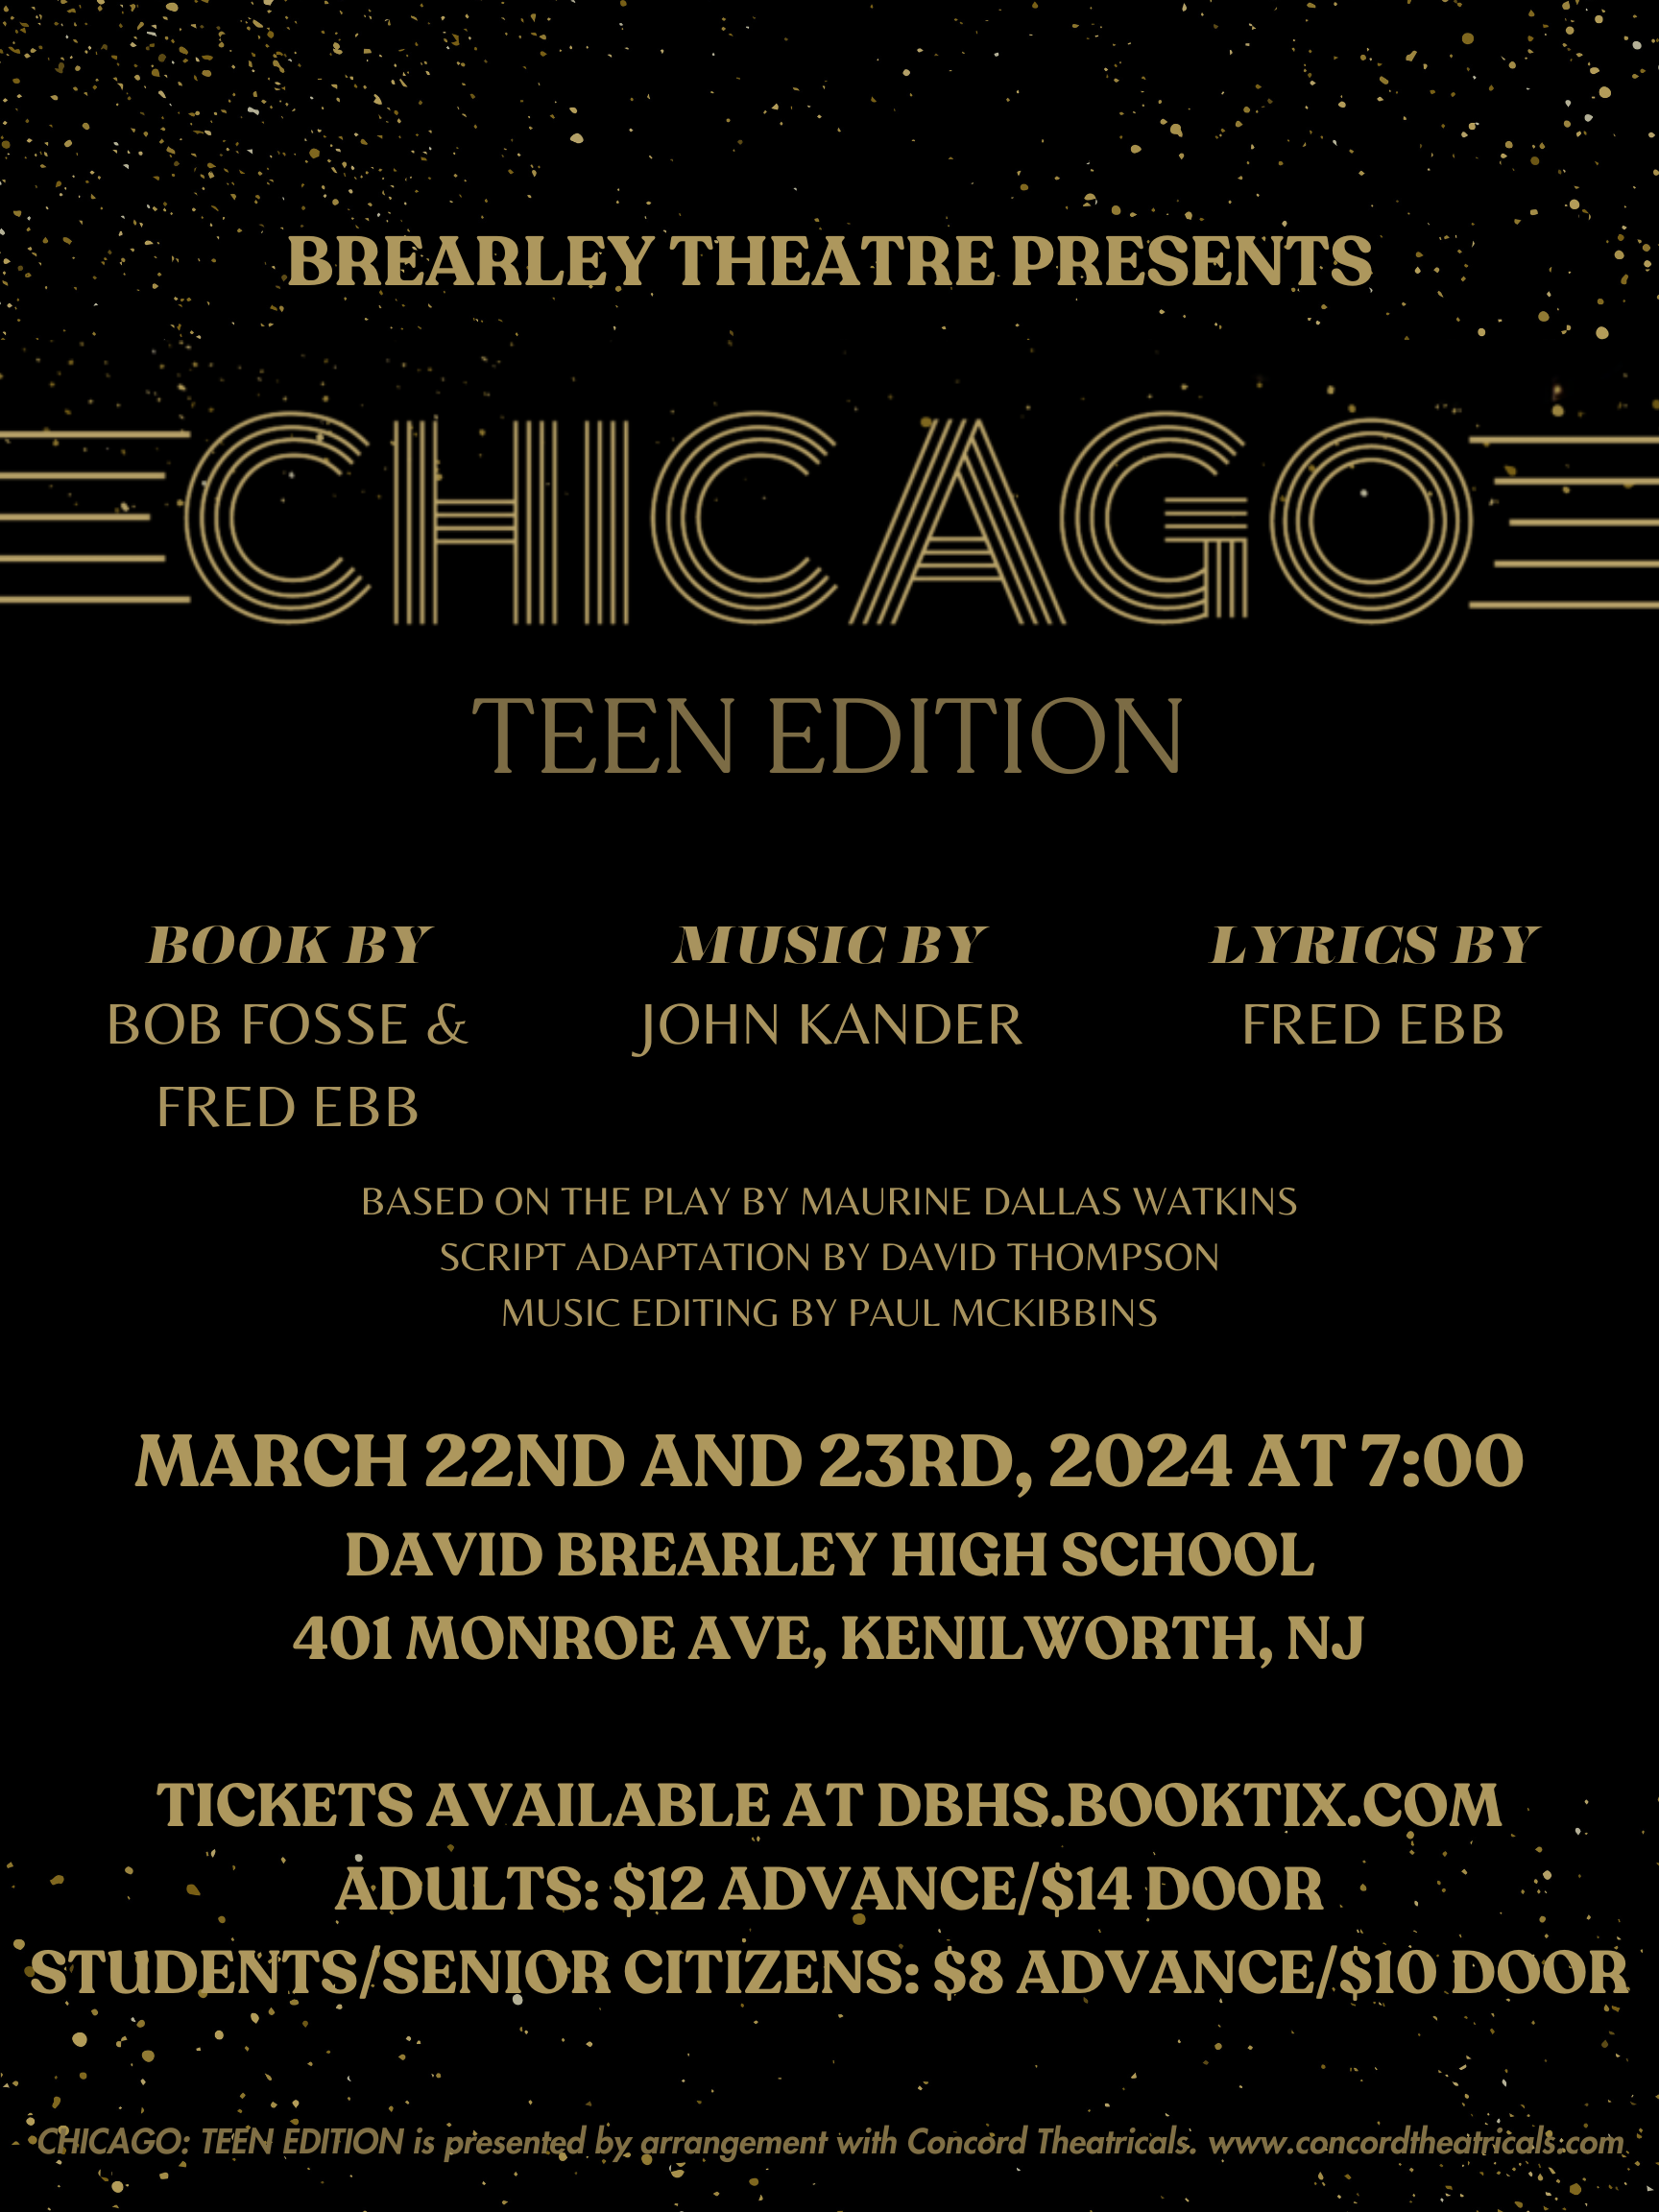 David Brearley High School Presents “Chicago: Teen Edition”